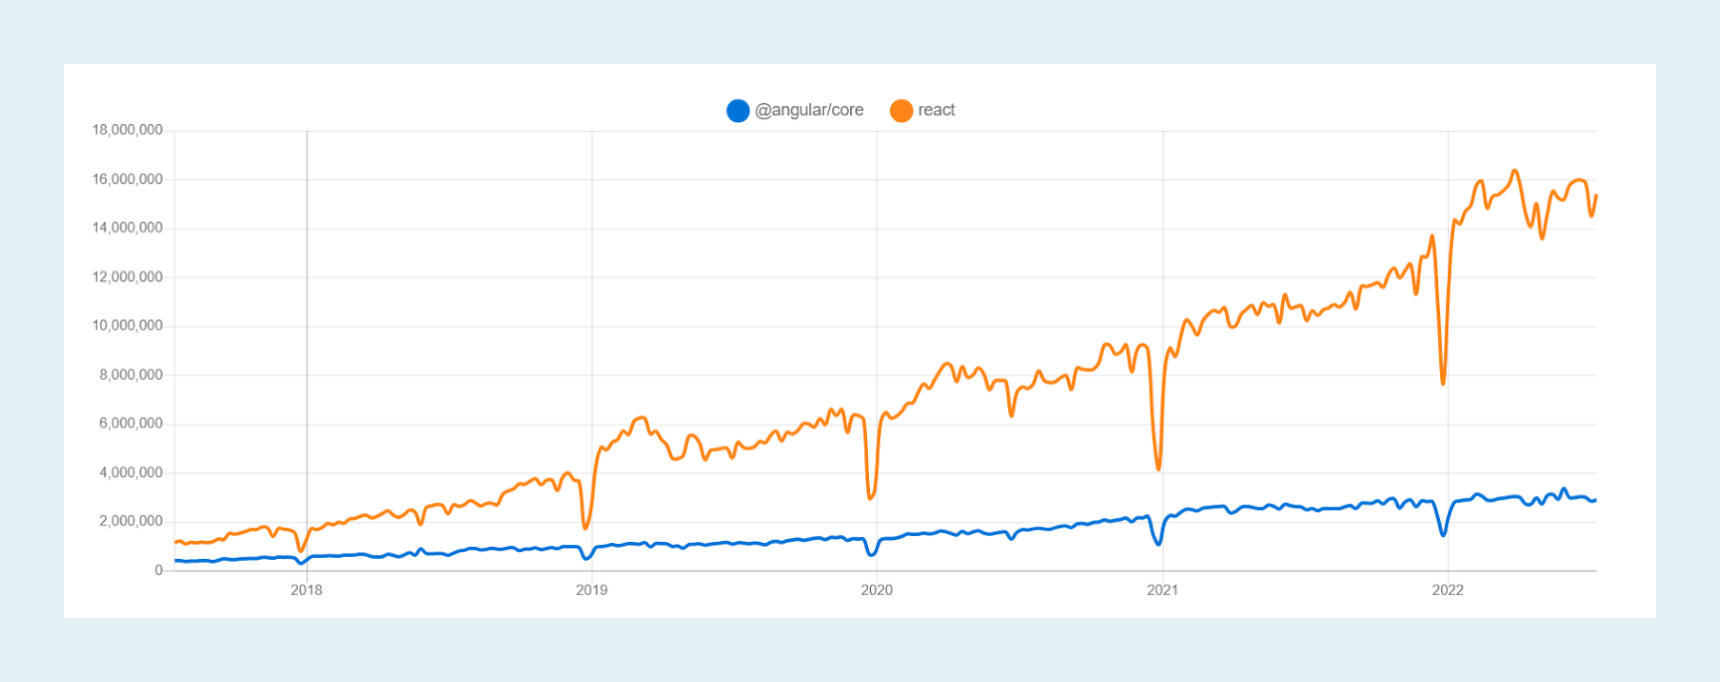 NPM Trends - React vs Angular